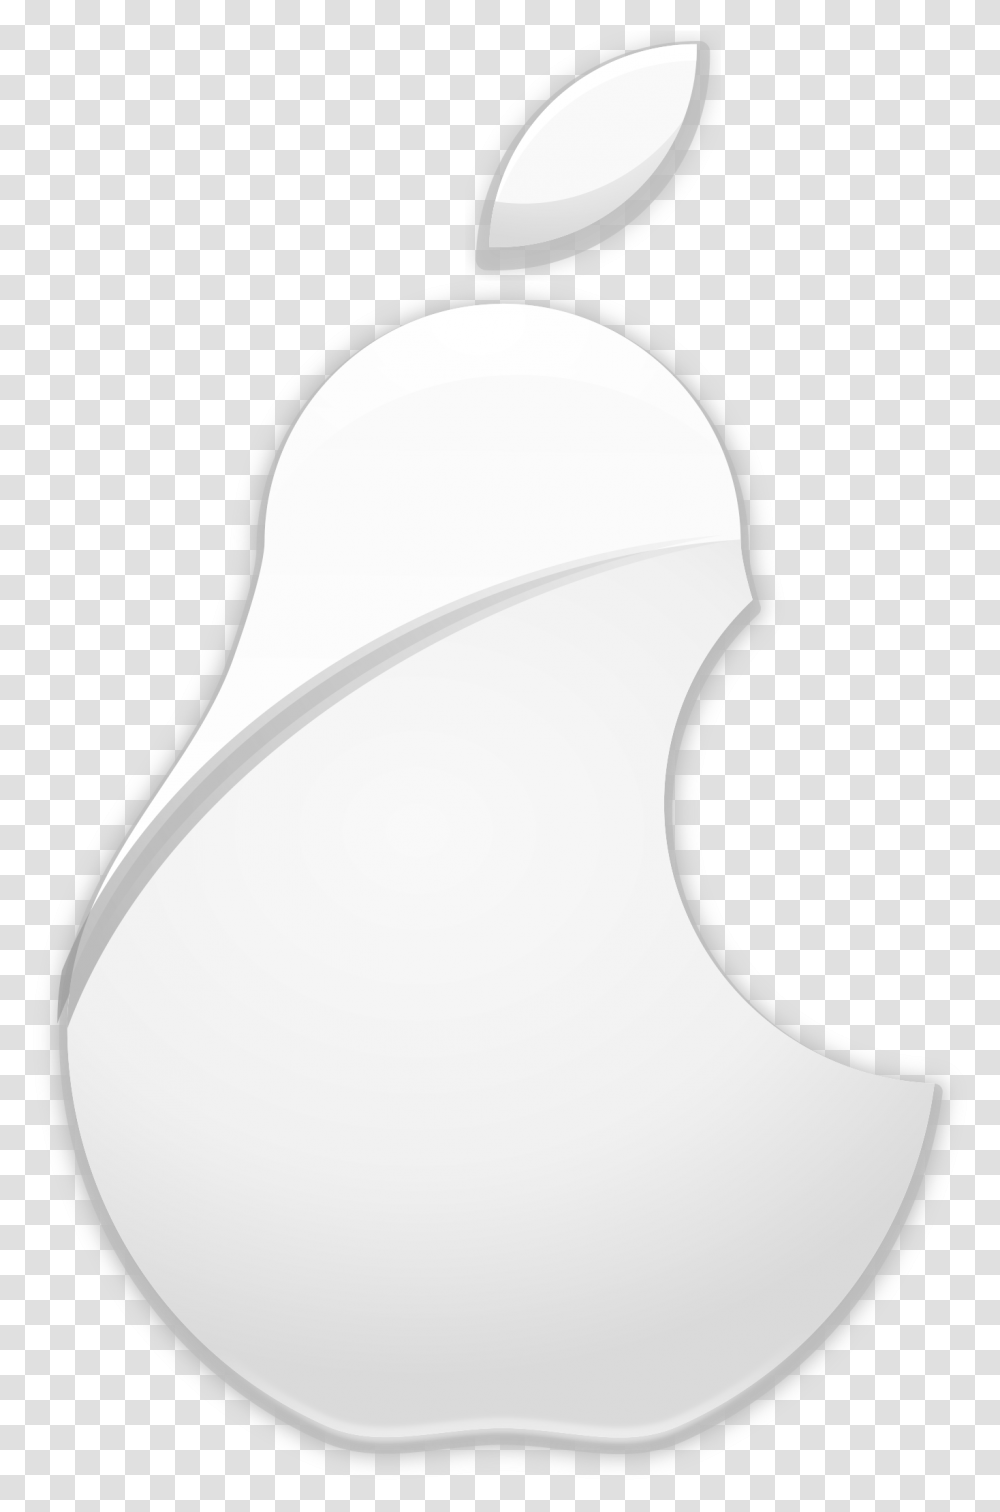 Pear Logo Clip Arts Apple Logo Transparente, Lamp Transparent Png